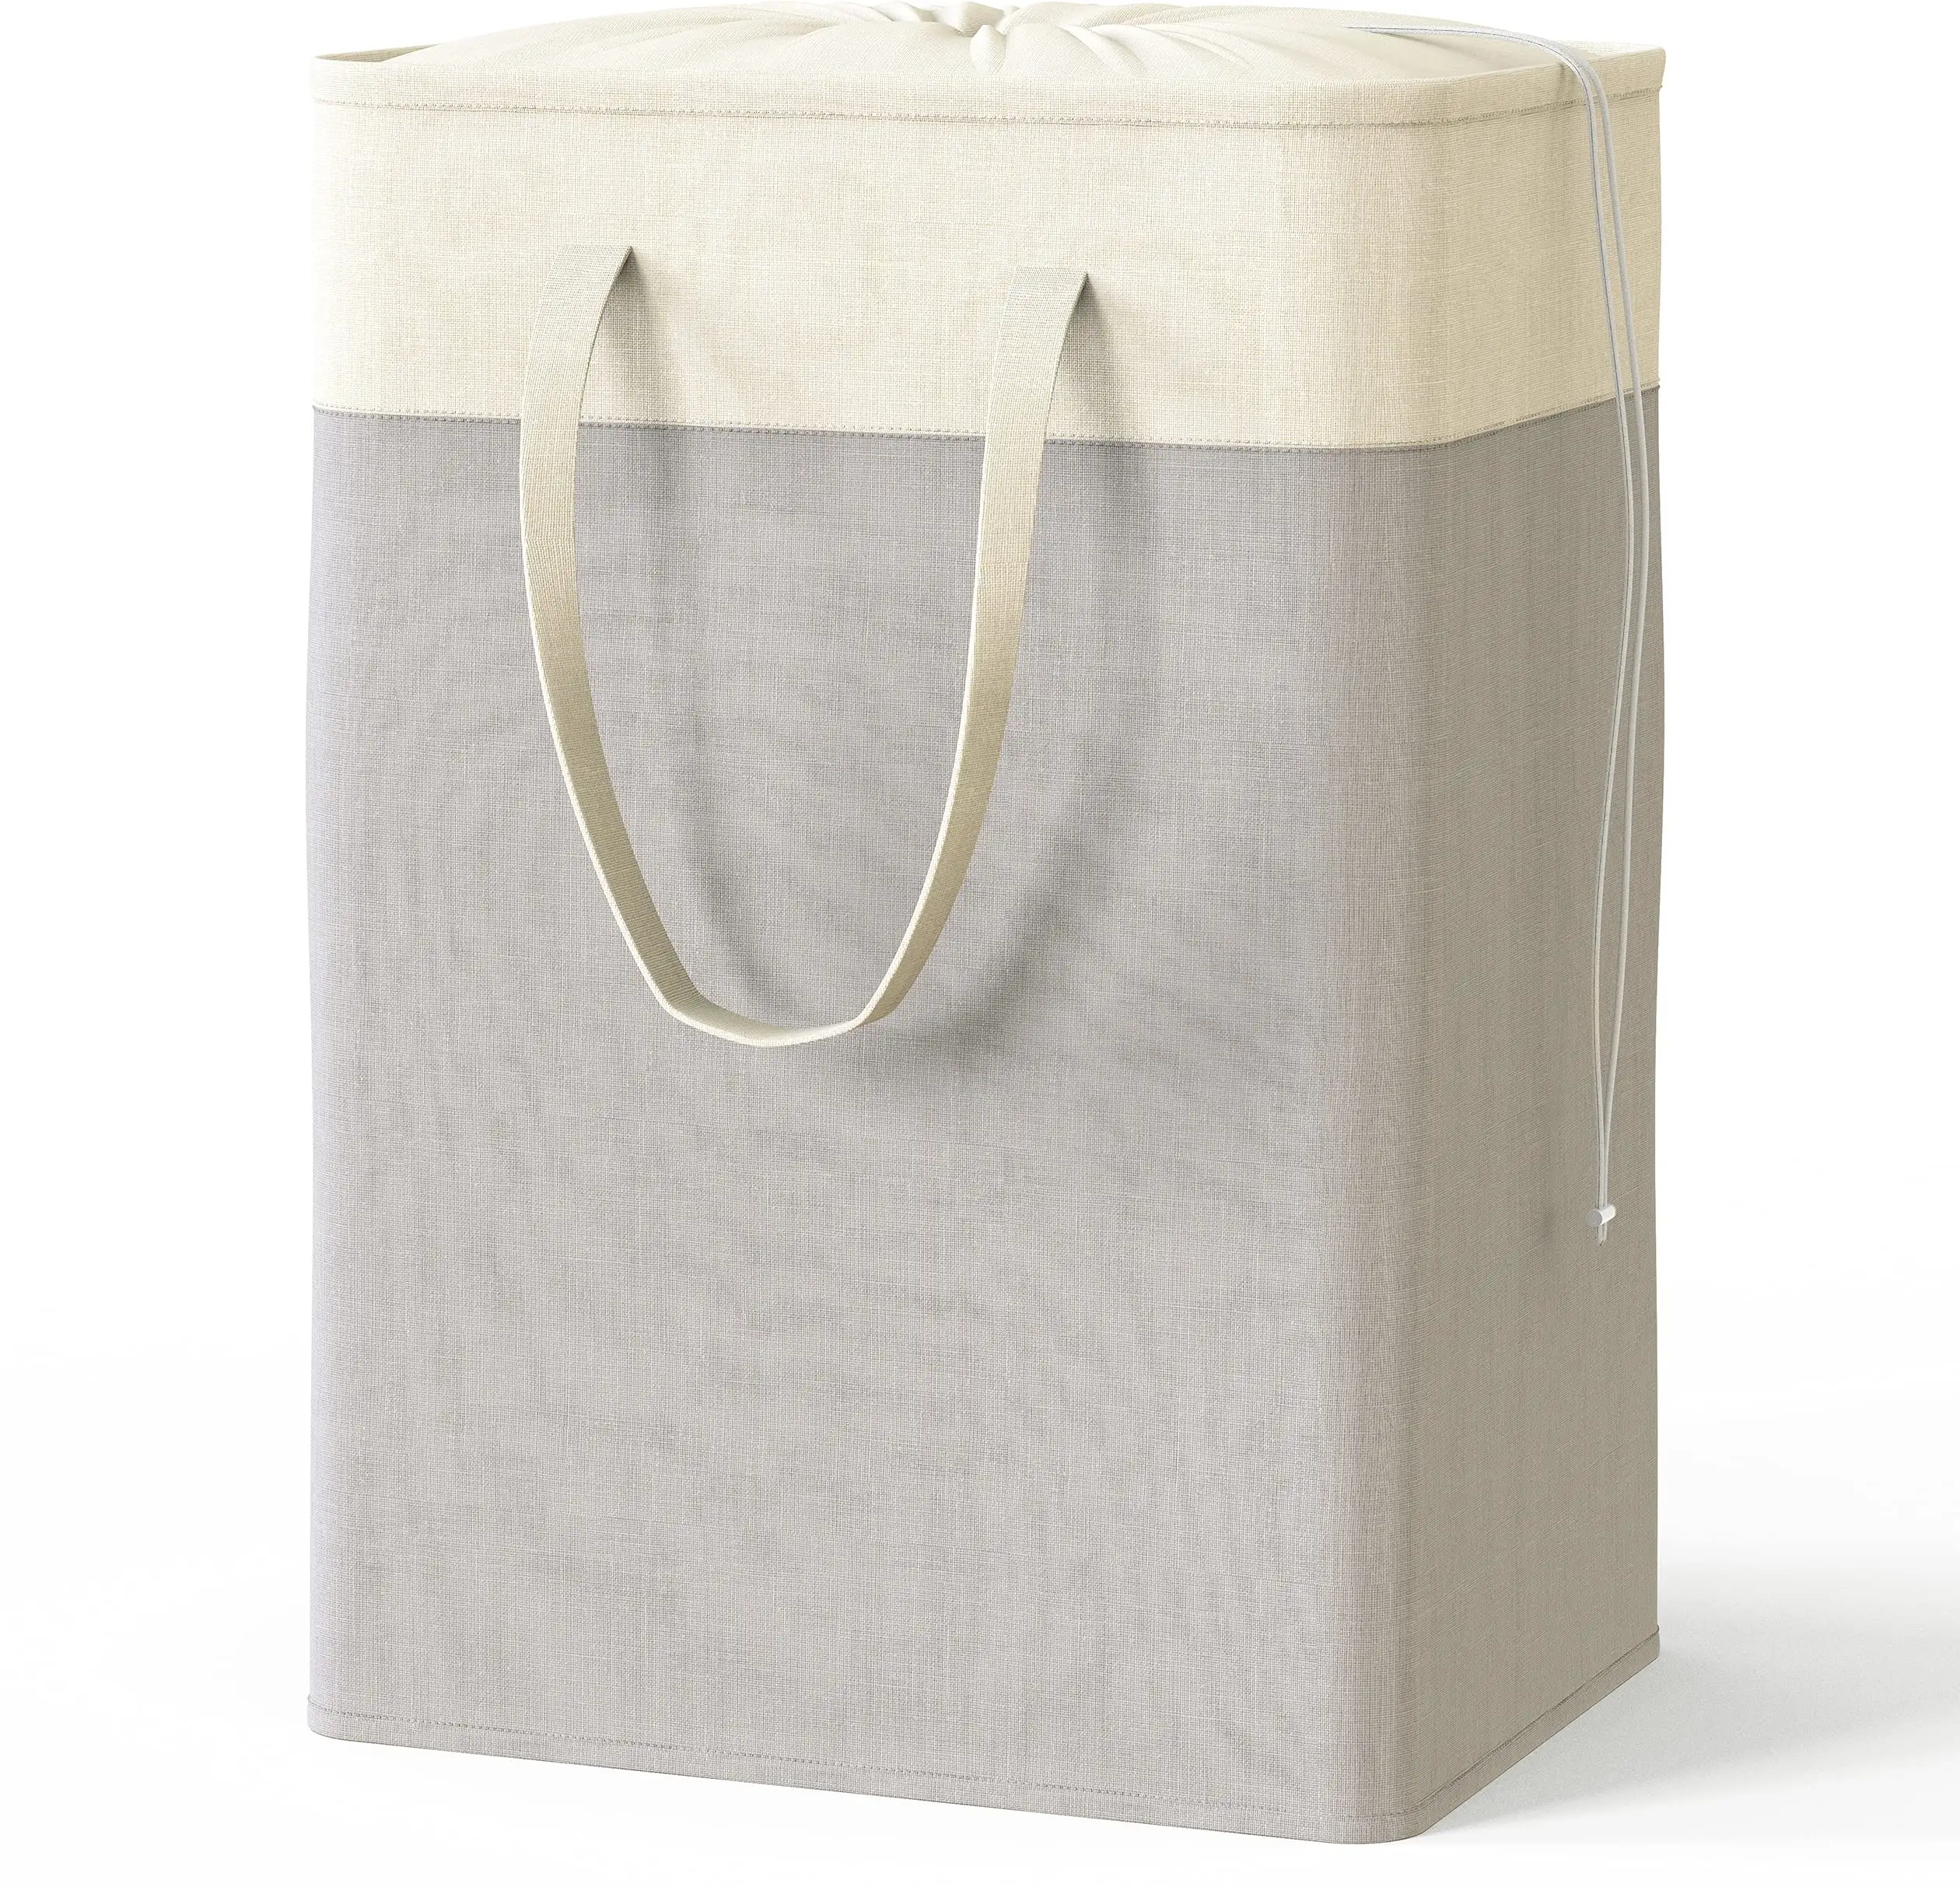 Cesto de lavandería rectangular de tela plegable, bolsa de tela plegable con tapa de cierre de cordón